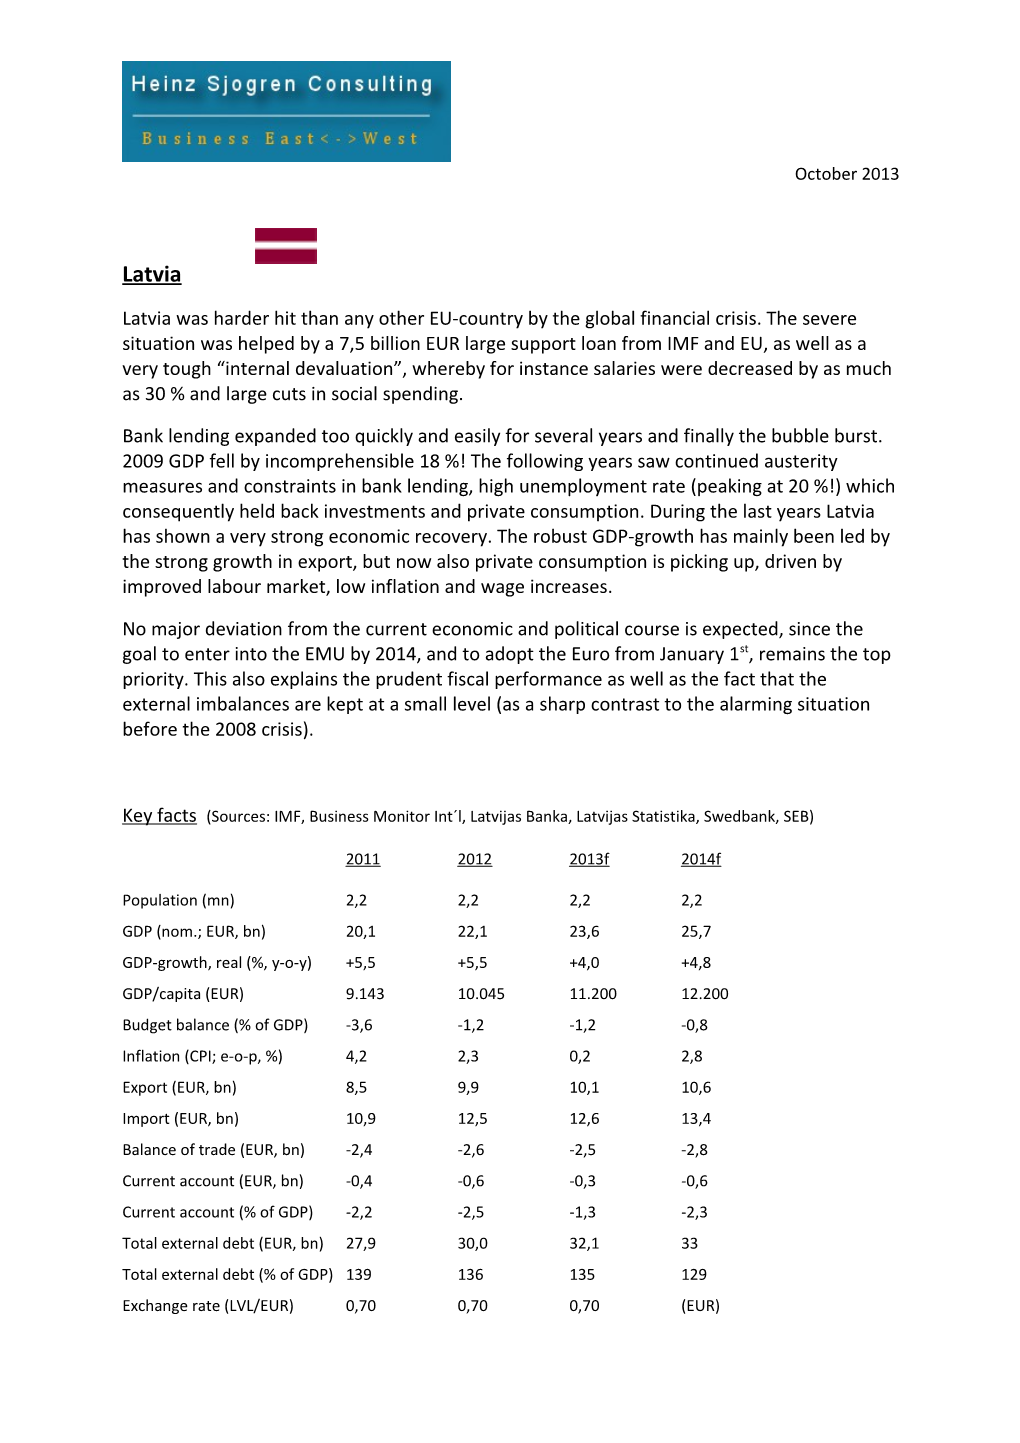 Key Facts (Sources: IMF, Business Monitor Int L, Latvijas Banka, Latvijas Statistika, Swedbank